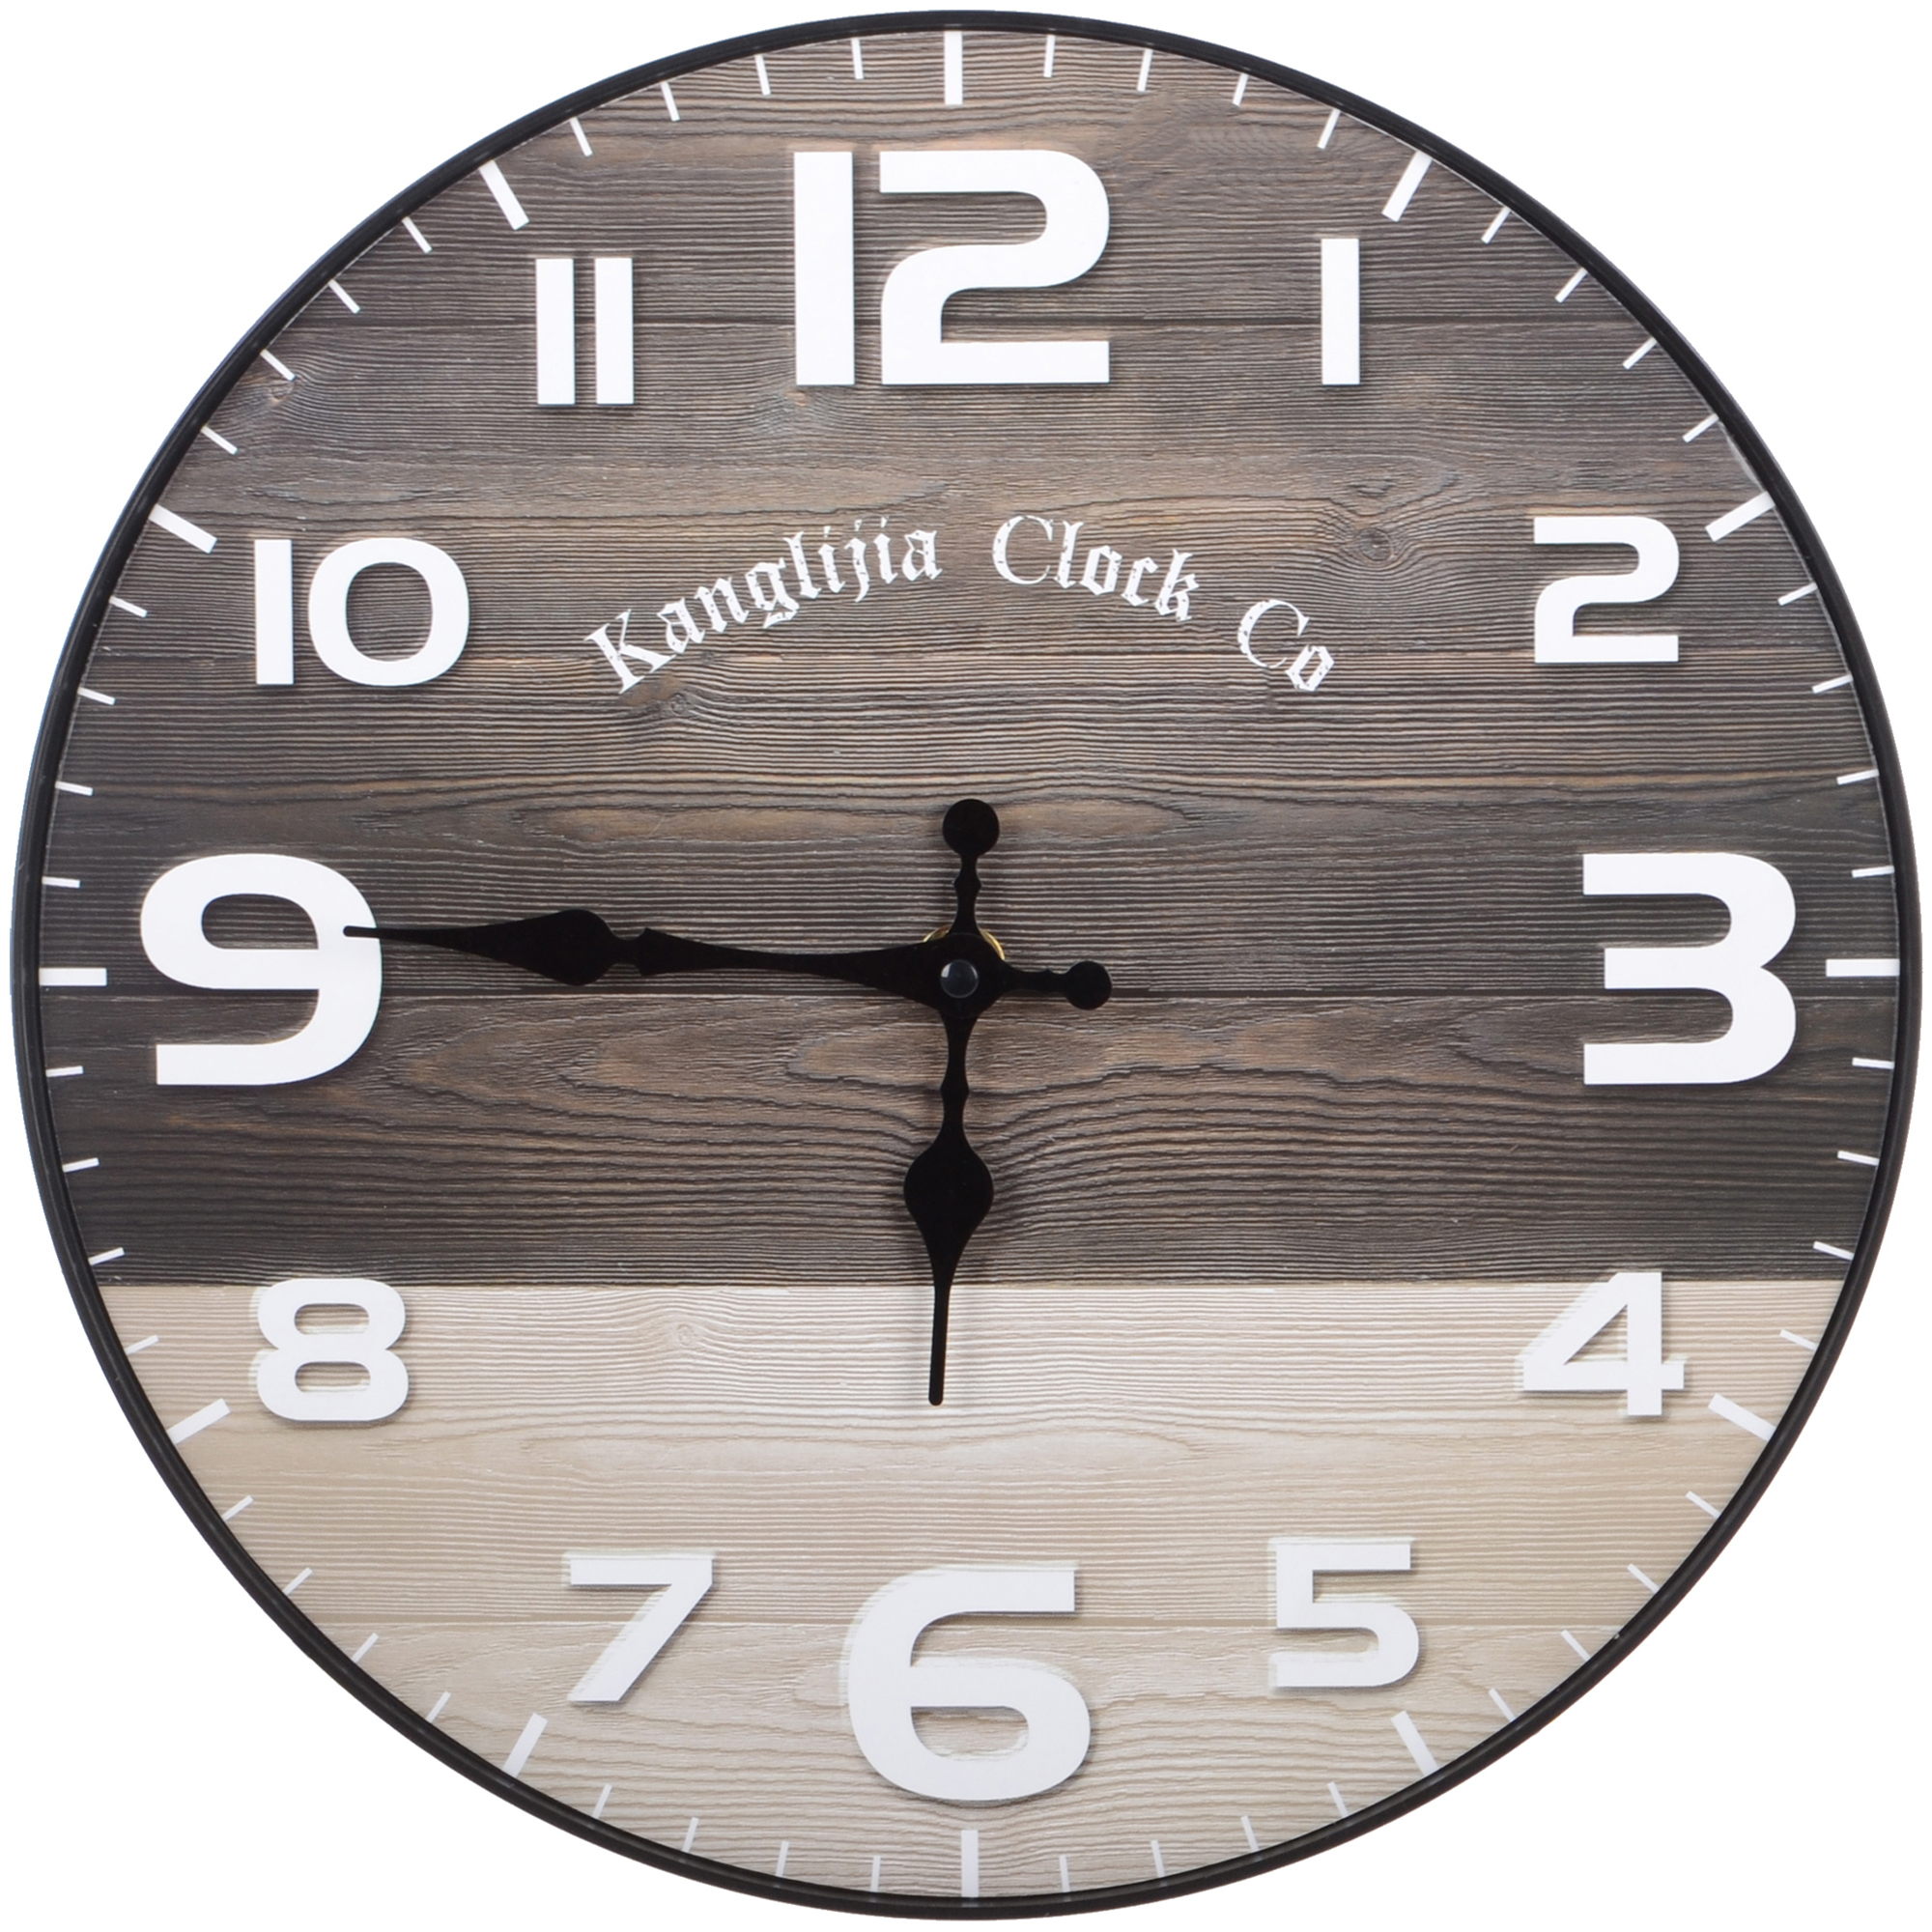 Часы настенные Kanglijia Clock коричневые 29,5х29,5х3,5 см часы электронные настенные настольные будильник календарь термометр 1cr2032 39 x 13 см